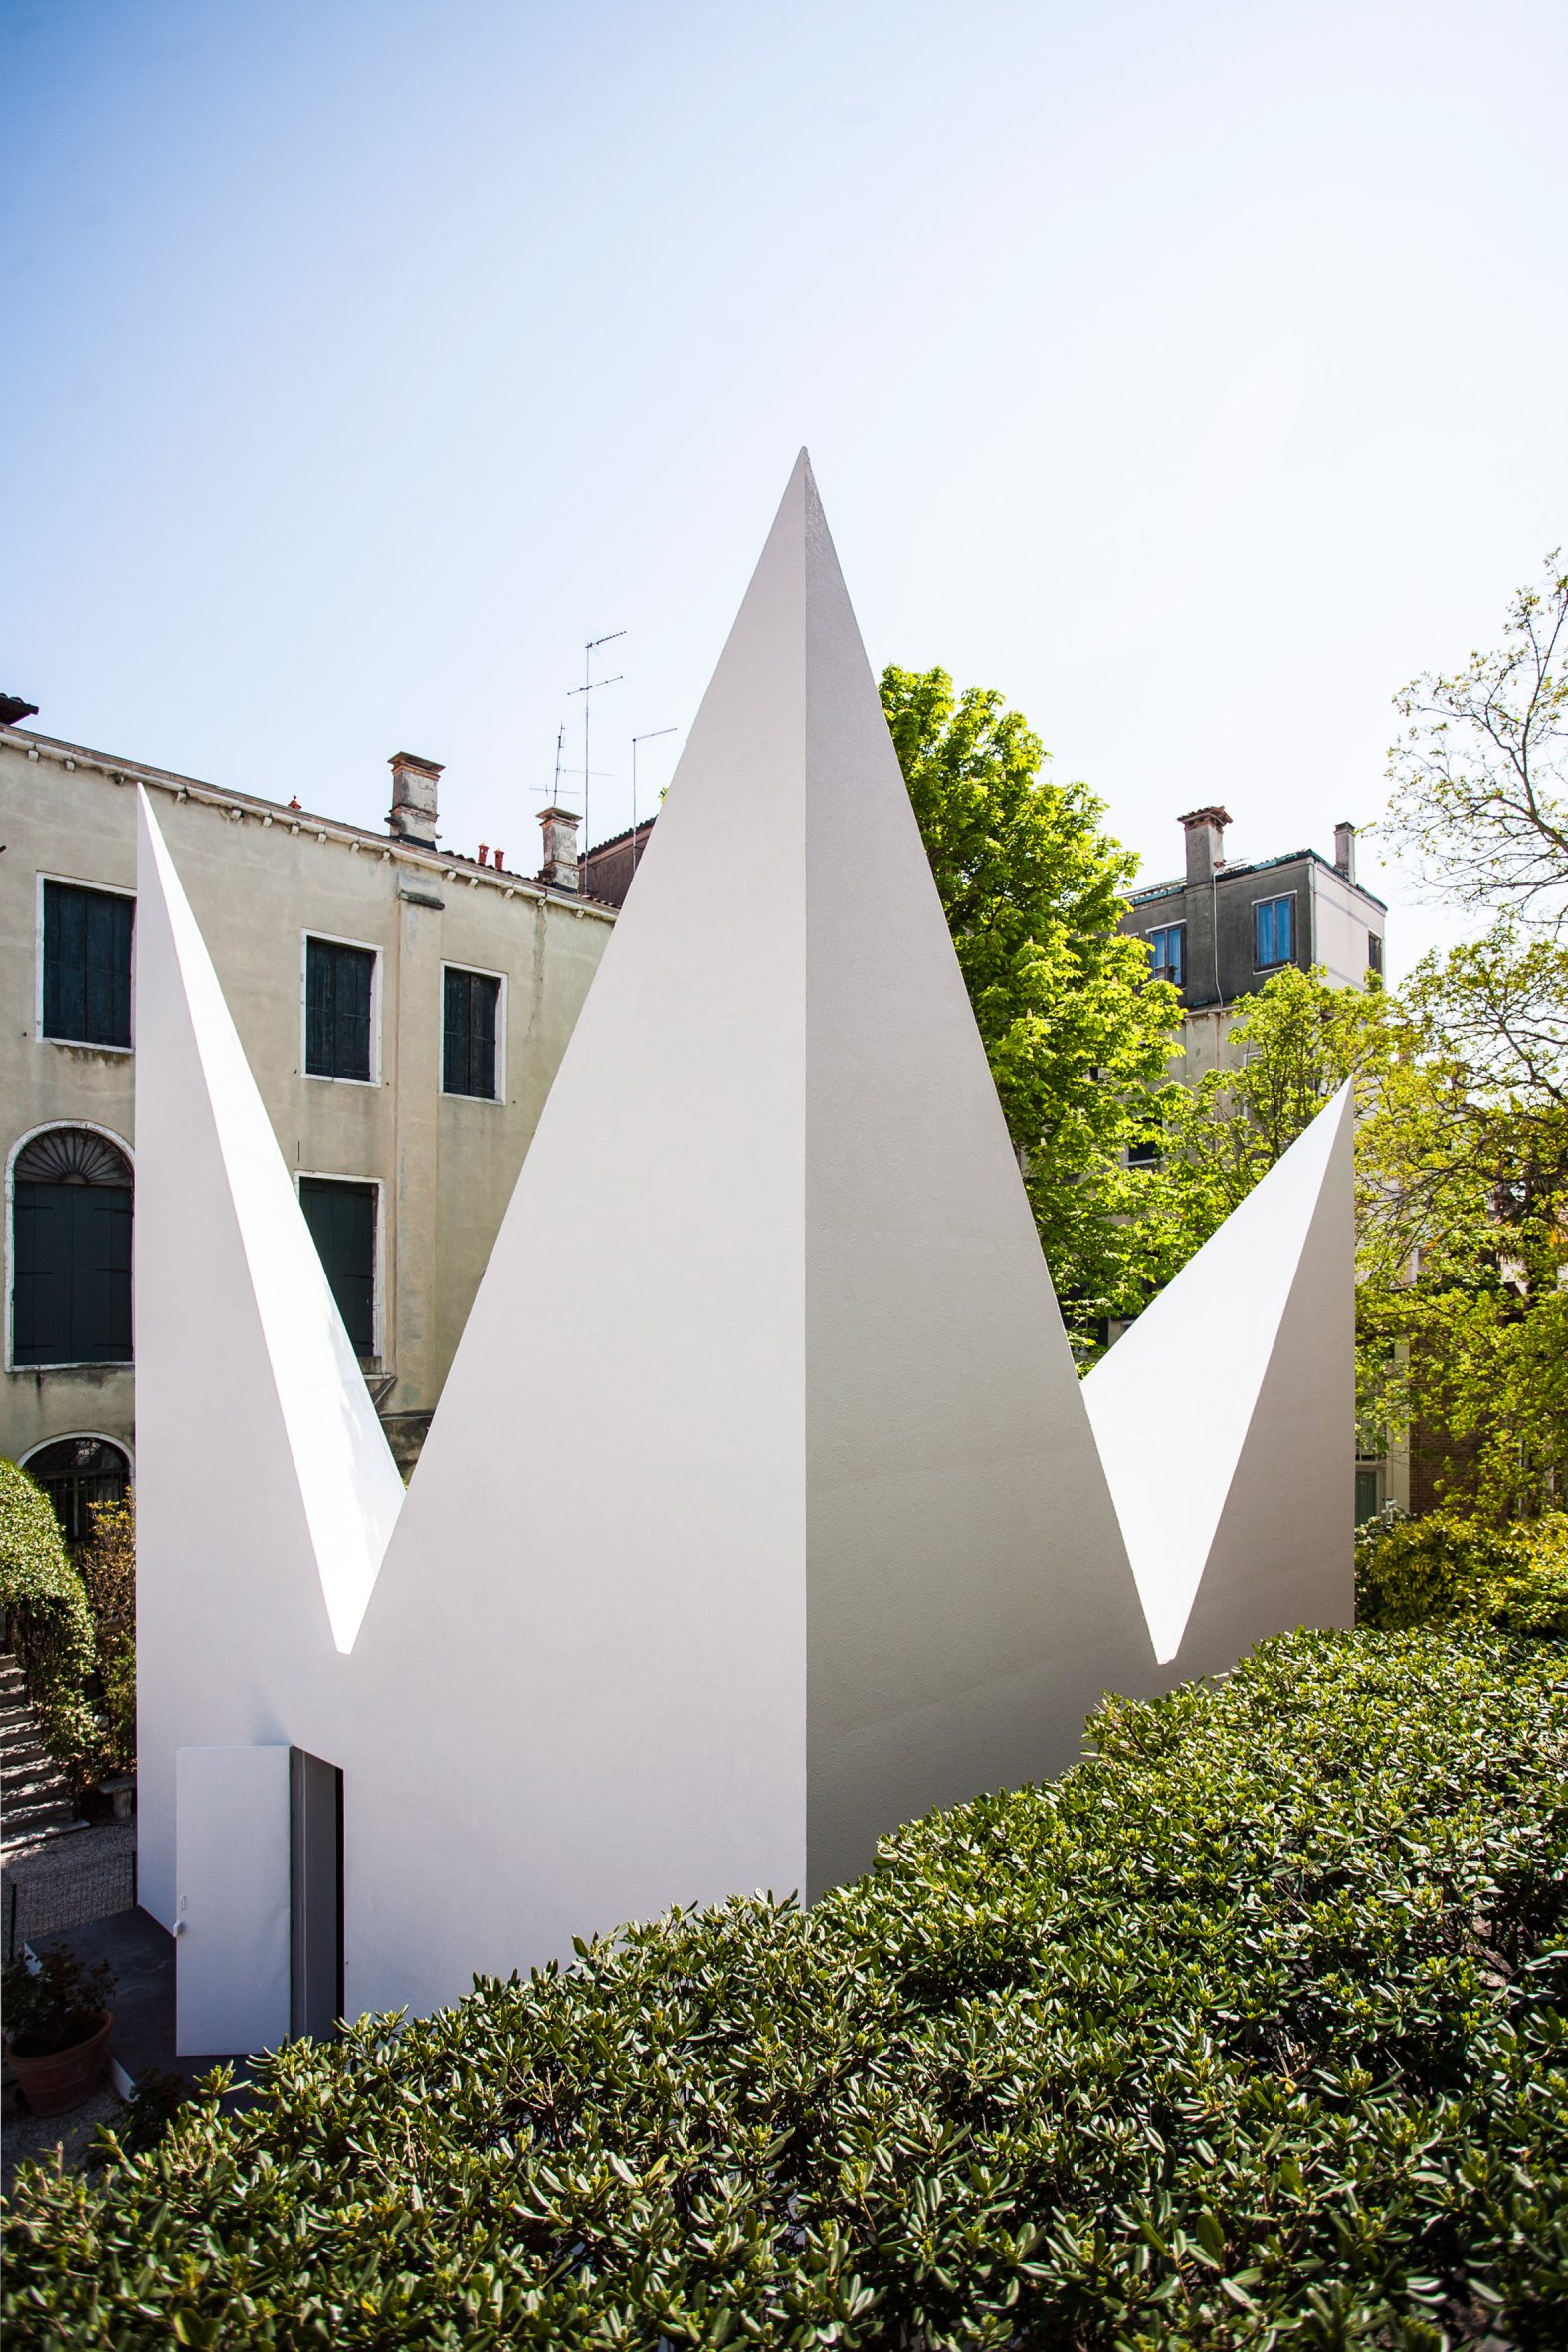 Paper-clad pavilion by Stefano Boeri Architetti